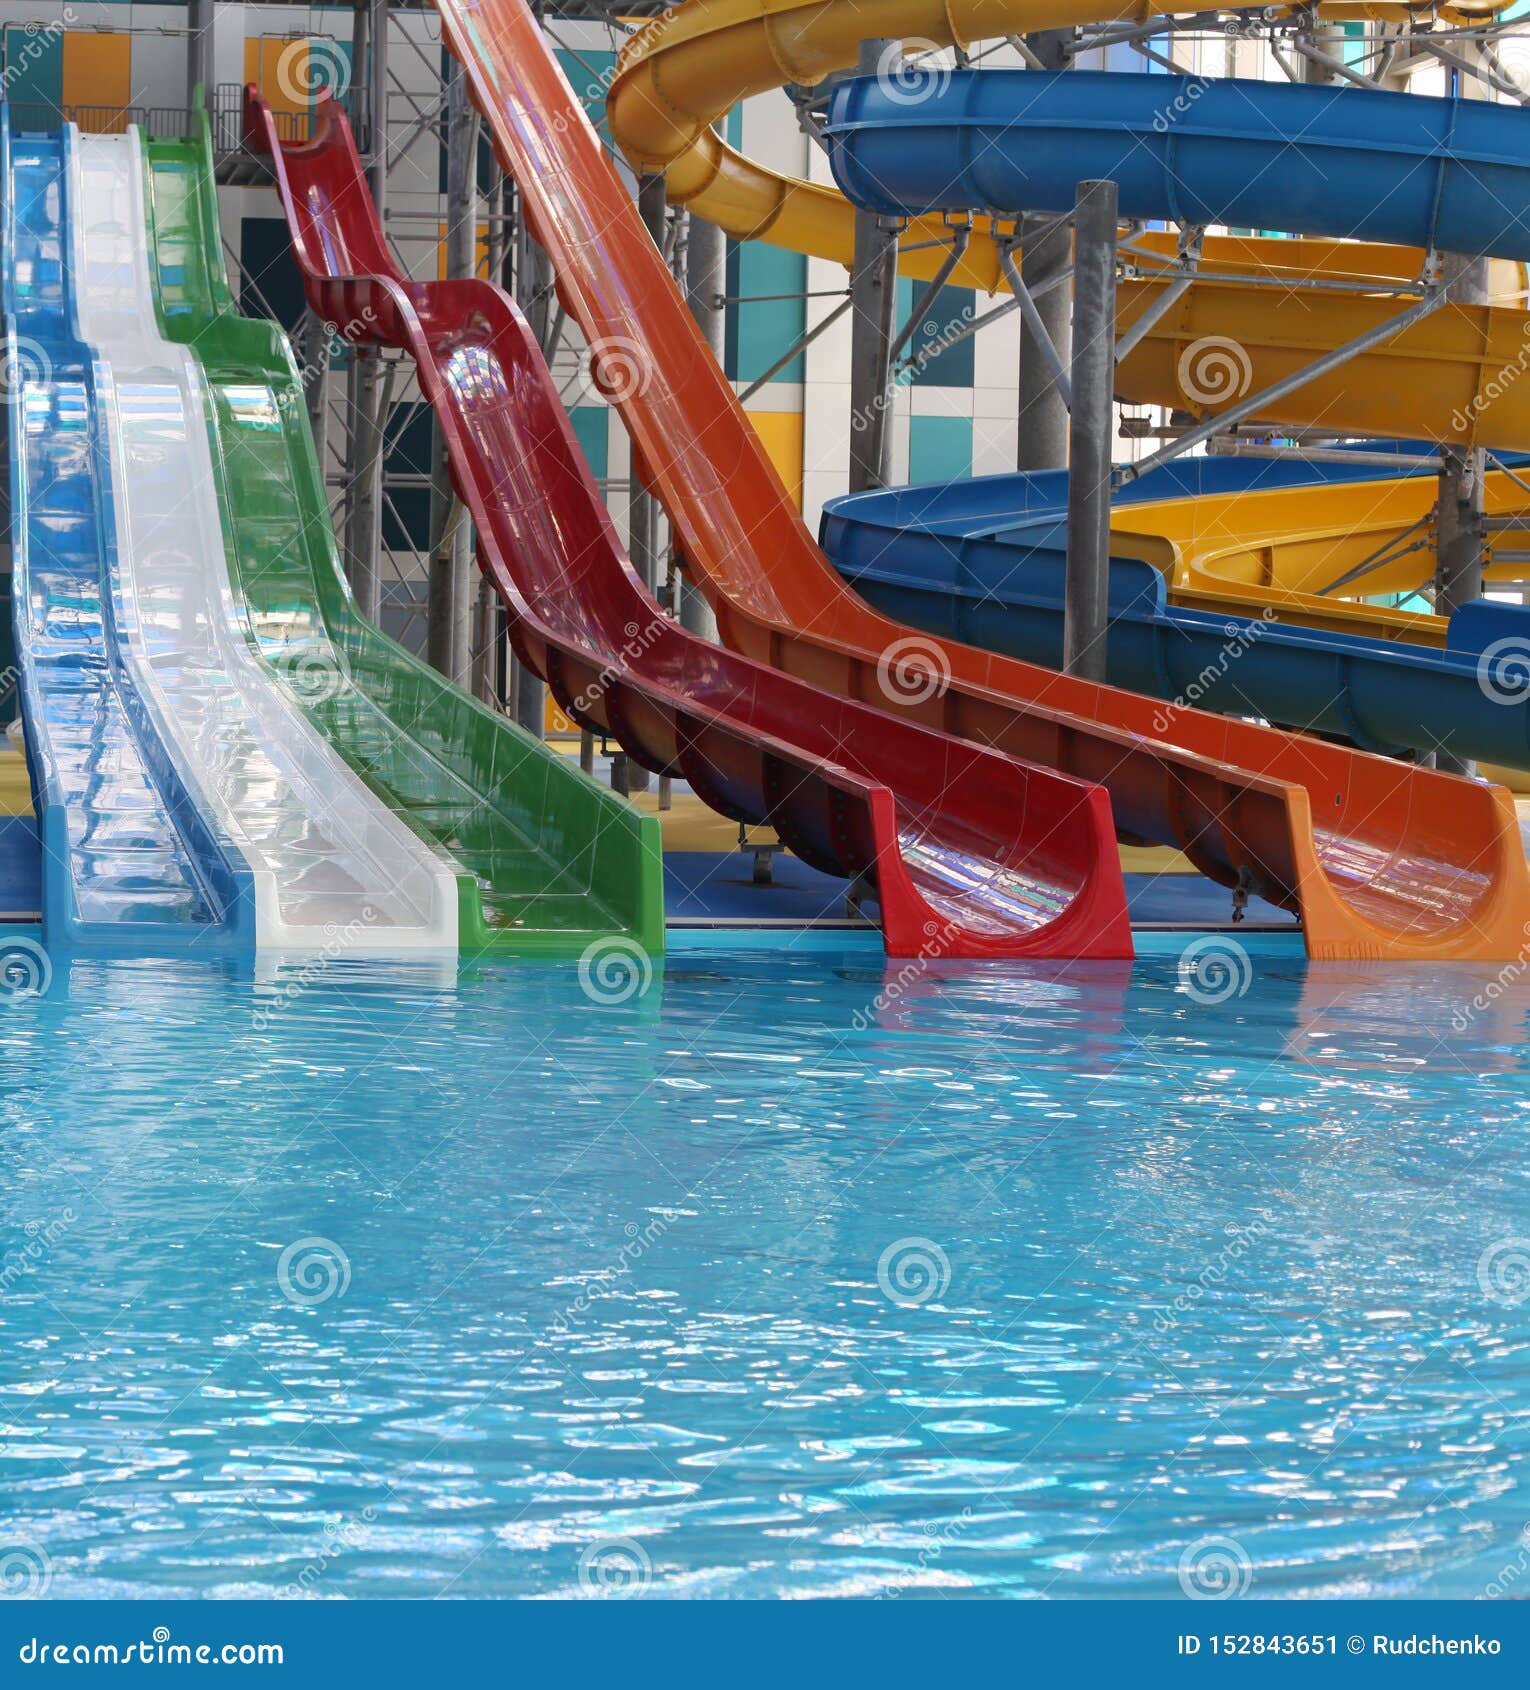 Free Images : amusement park, swimming pool, leisure, fun 